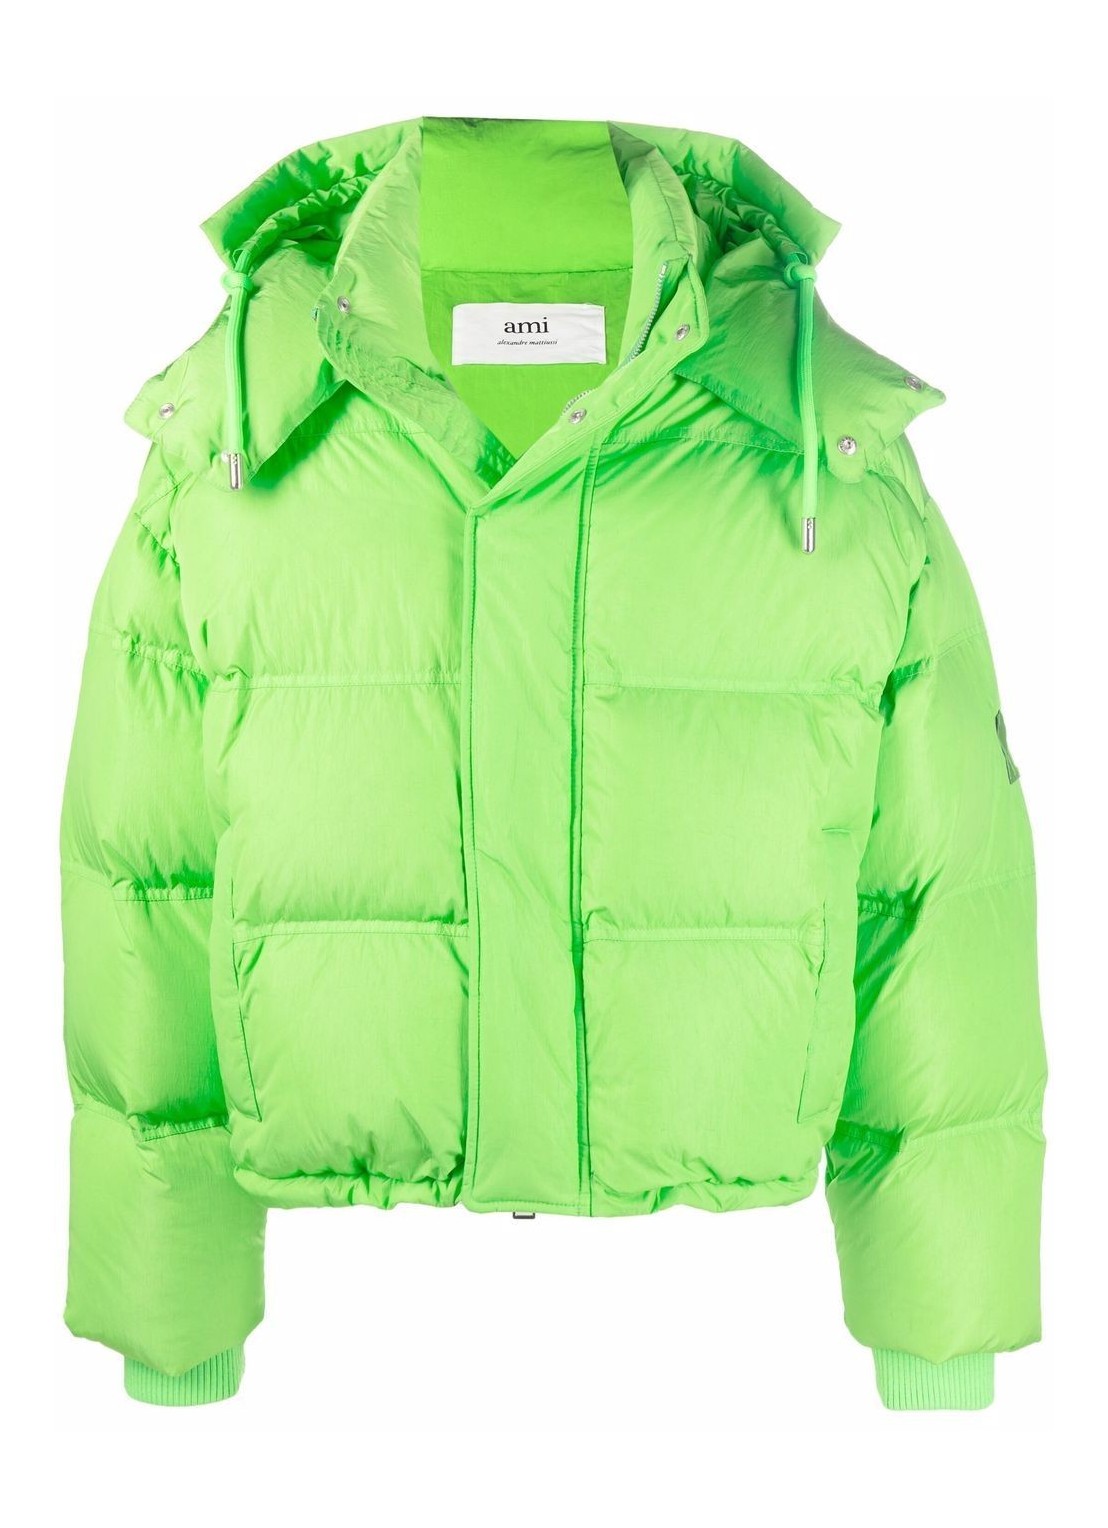 ami outerwear man adc down jacket ujk401276 300 Talla XS Color verde